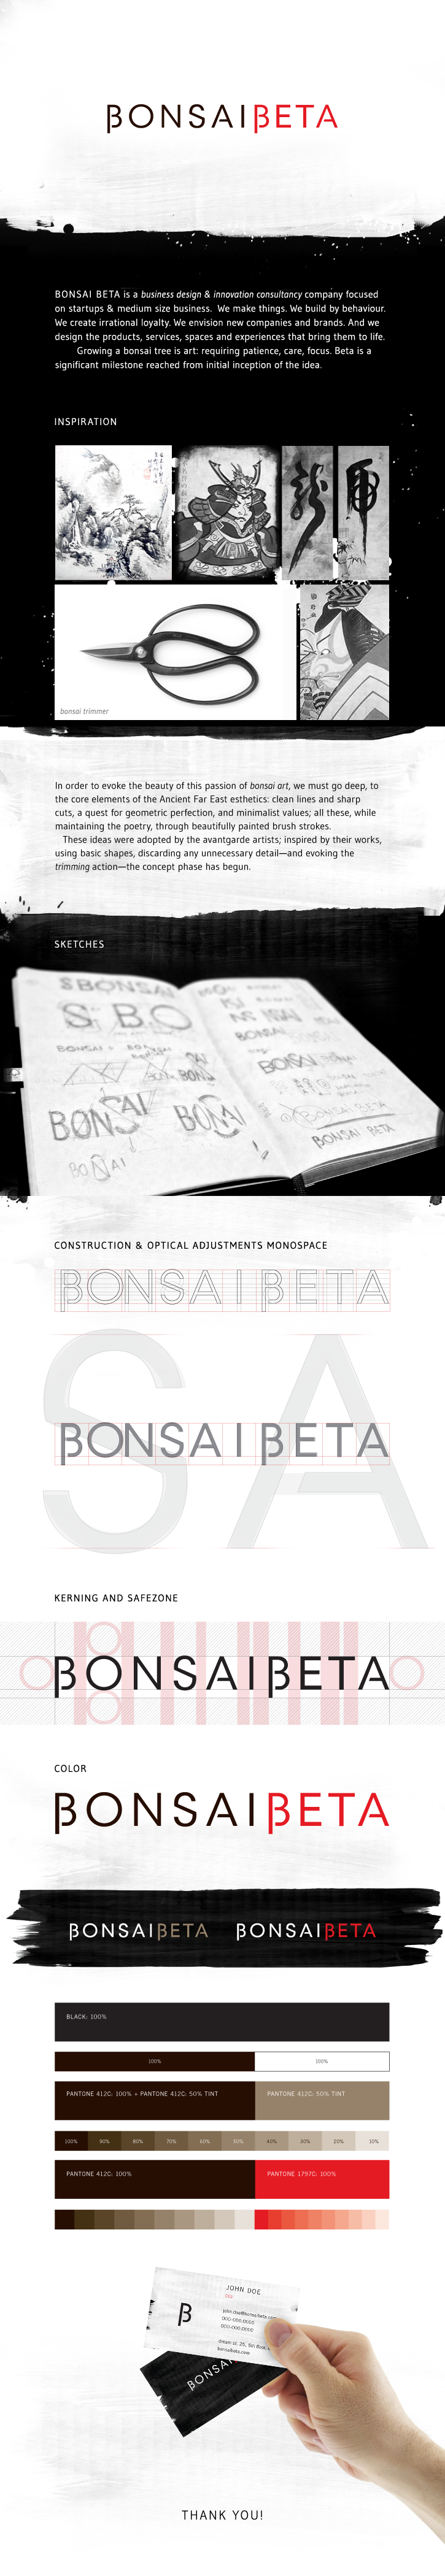 bonsai identity start-up  branding  graphic design red and black black and white